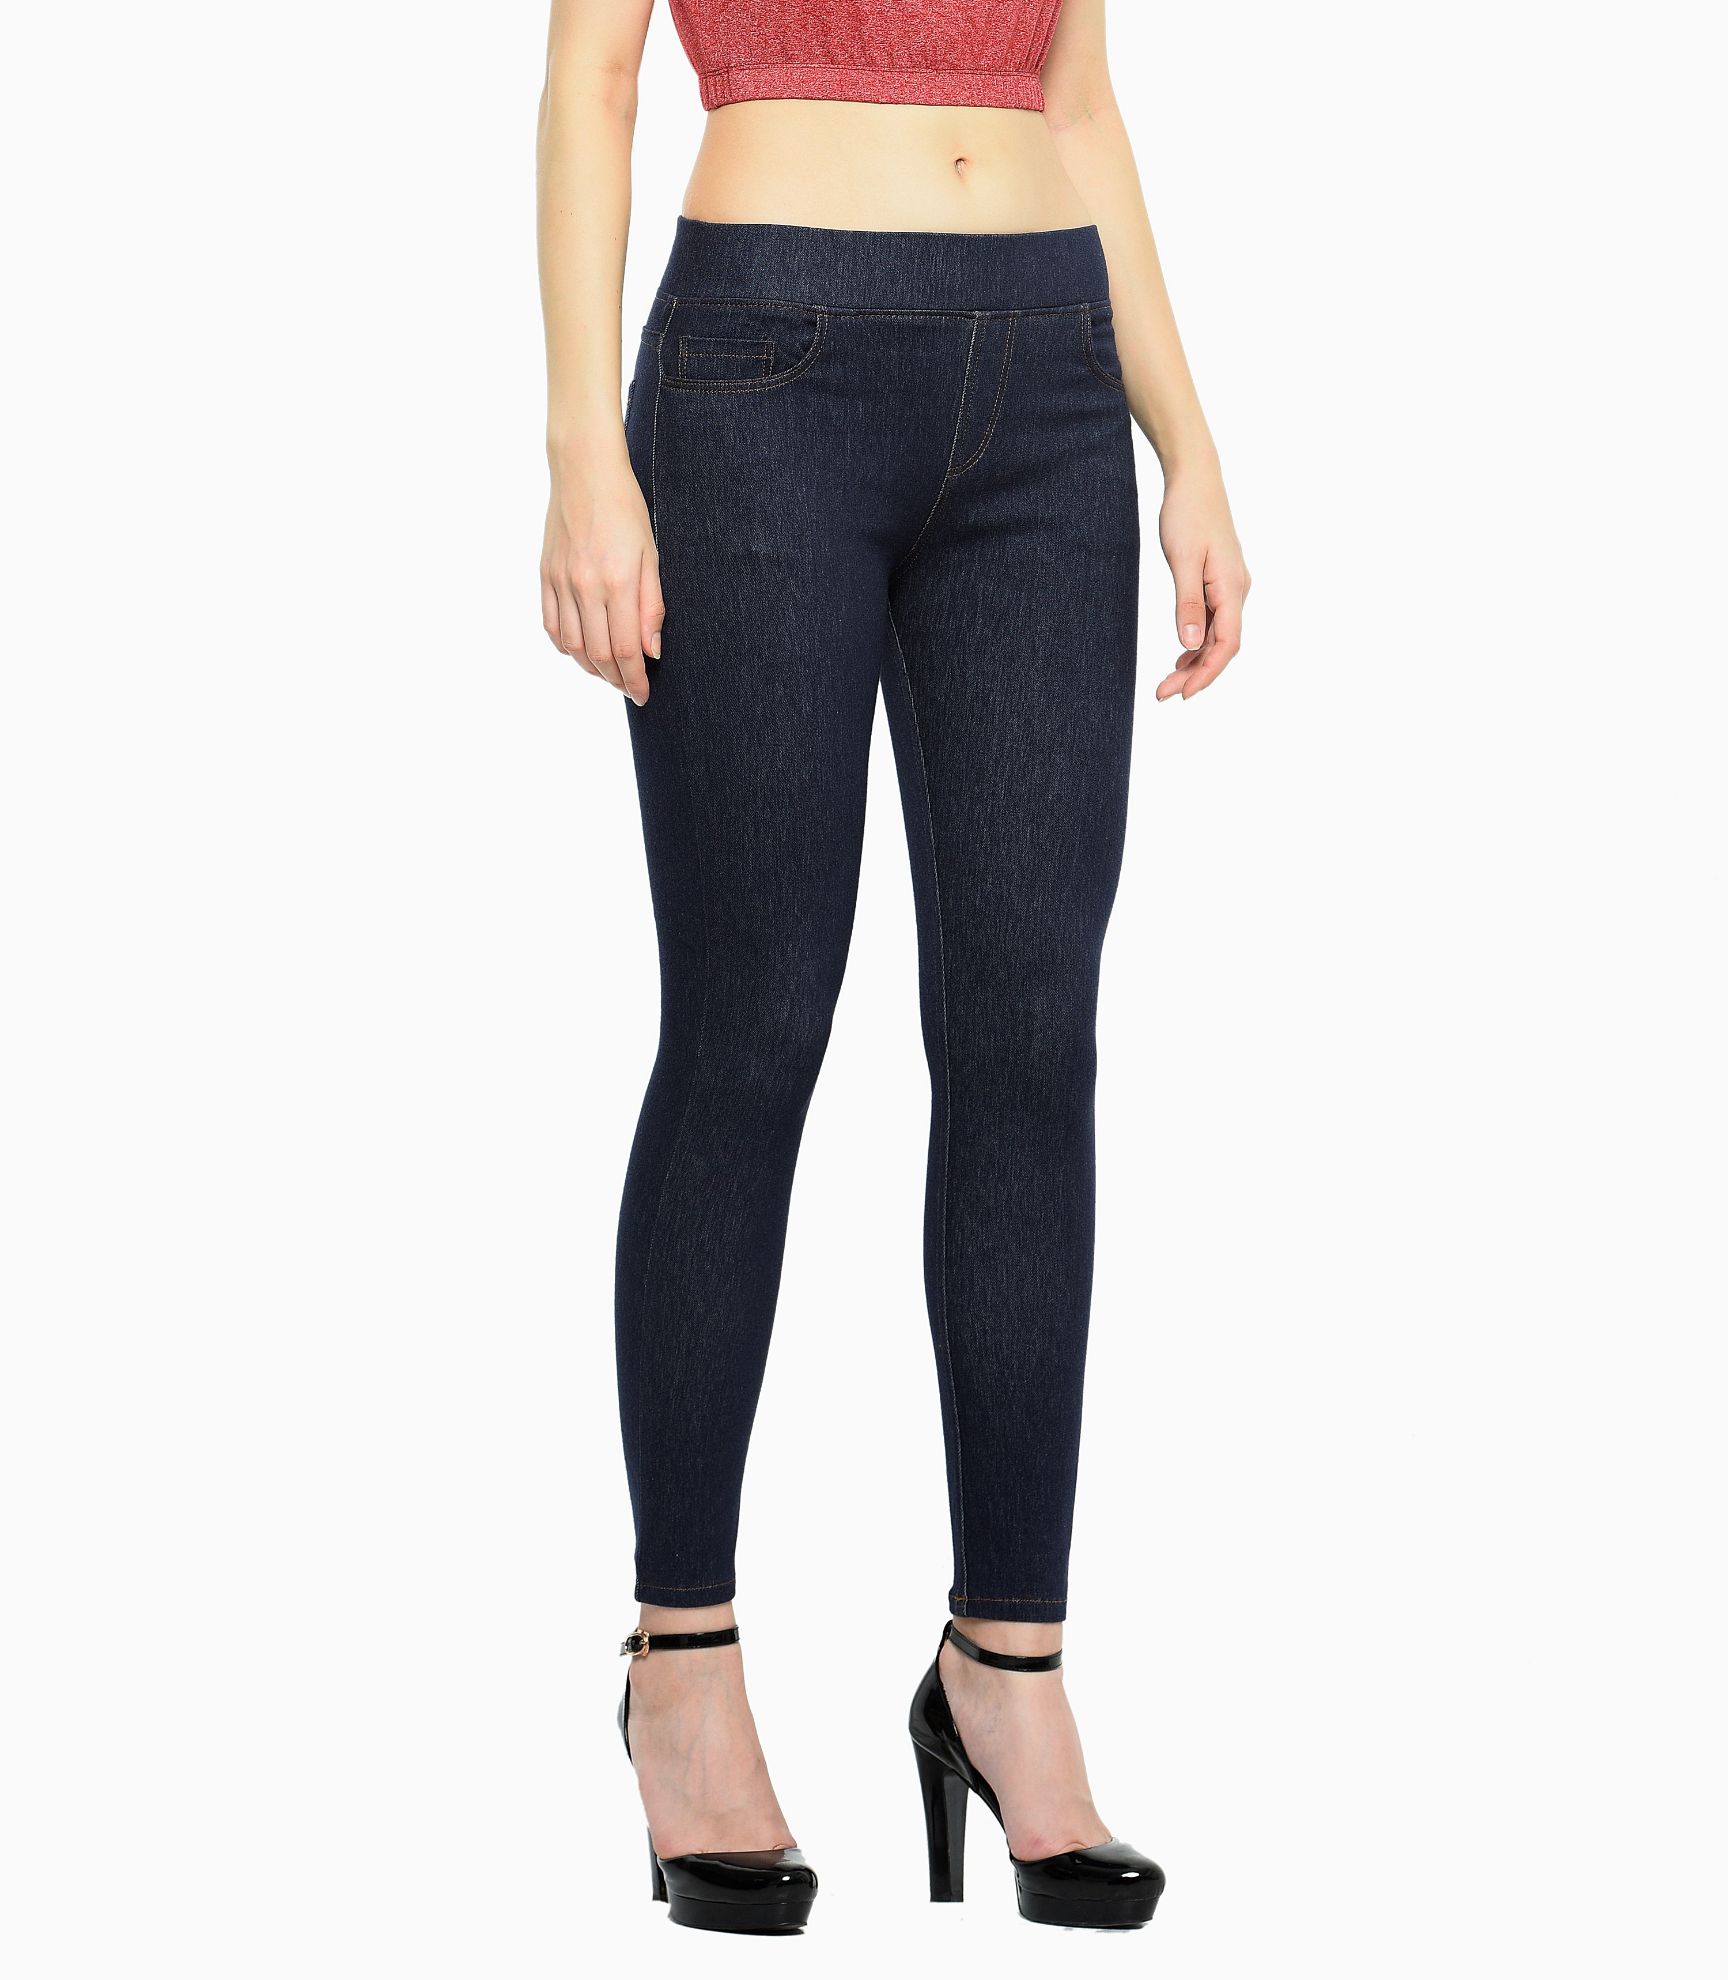 HugeStore Women Ladies Skinny Faux Demin Leggings Jeggings Stretch Pants  Pencil Jeans Tights Trousers Black,34W / 35L : Amazon.co.uk: Fashion